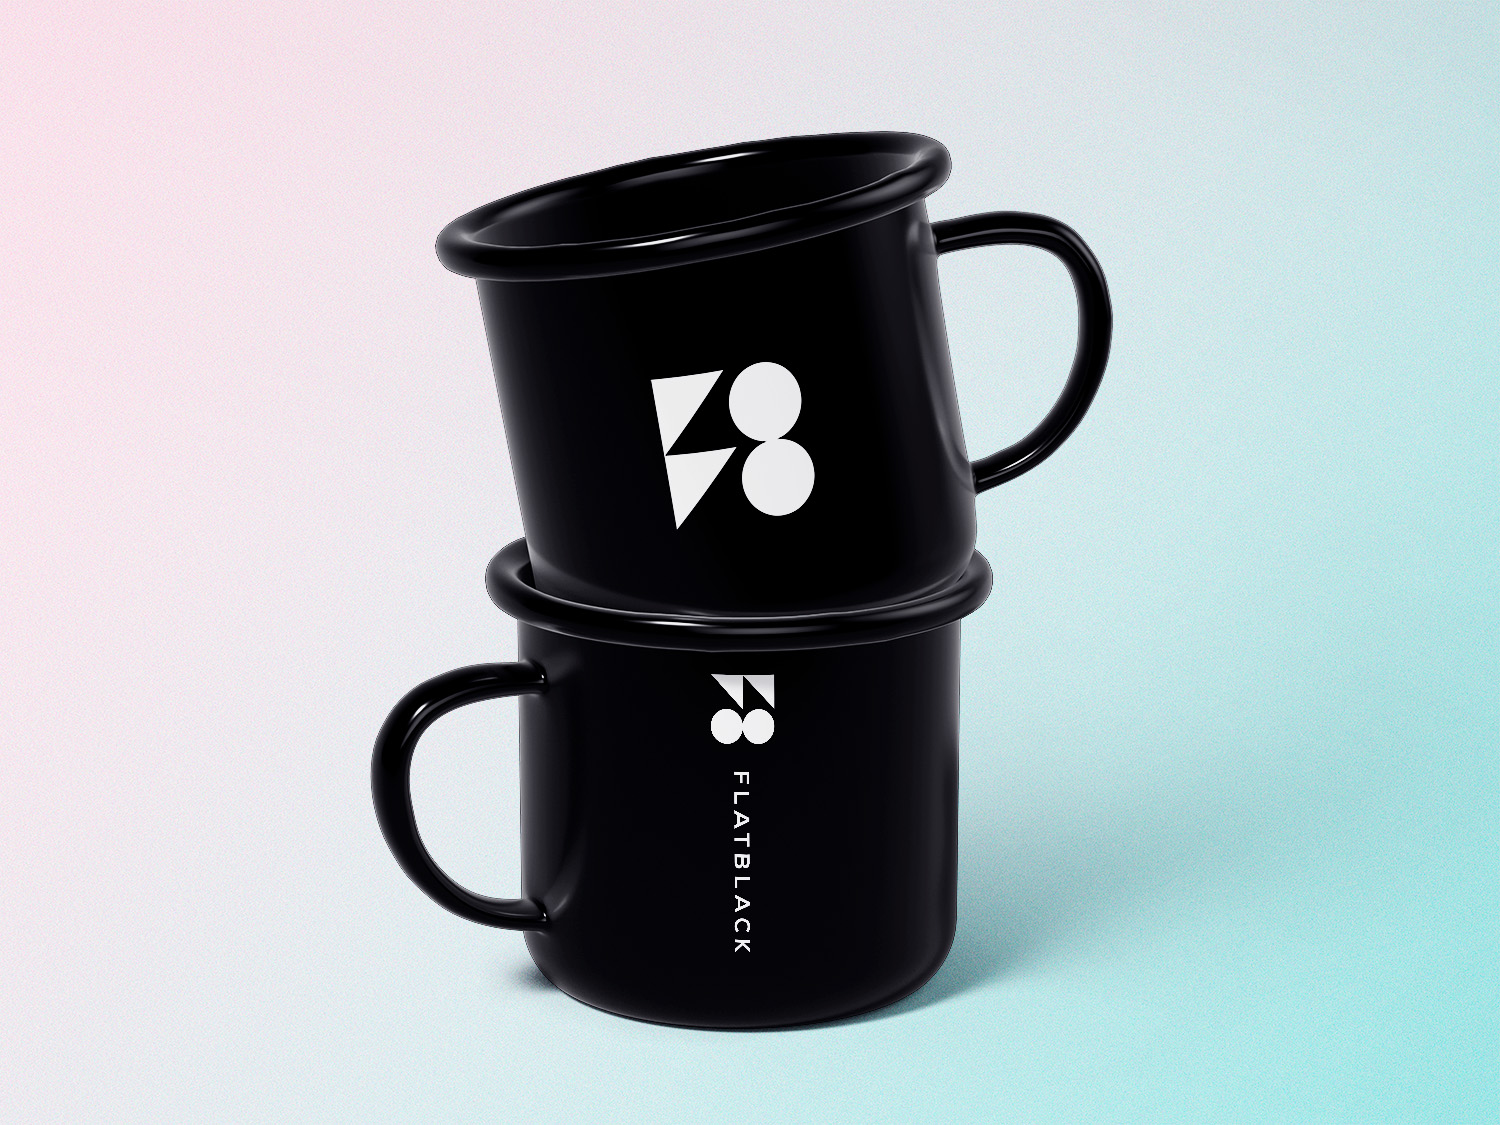 Flatblack Agency - Mug Design - Tony Headrick